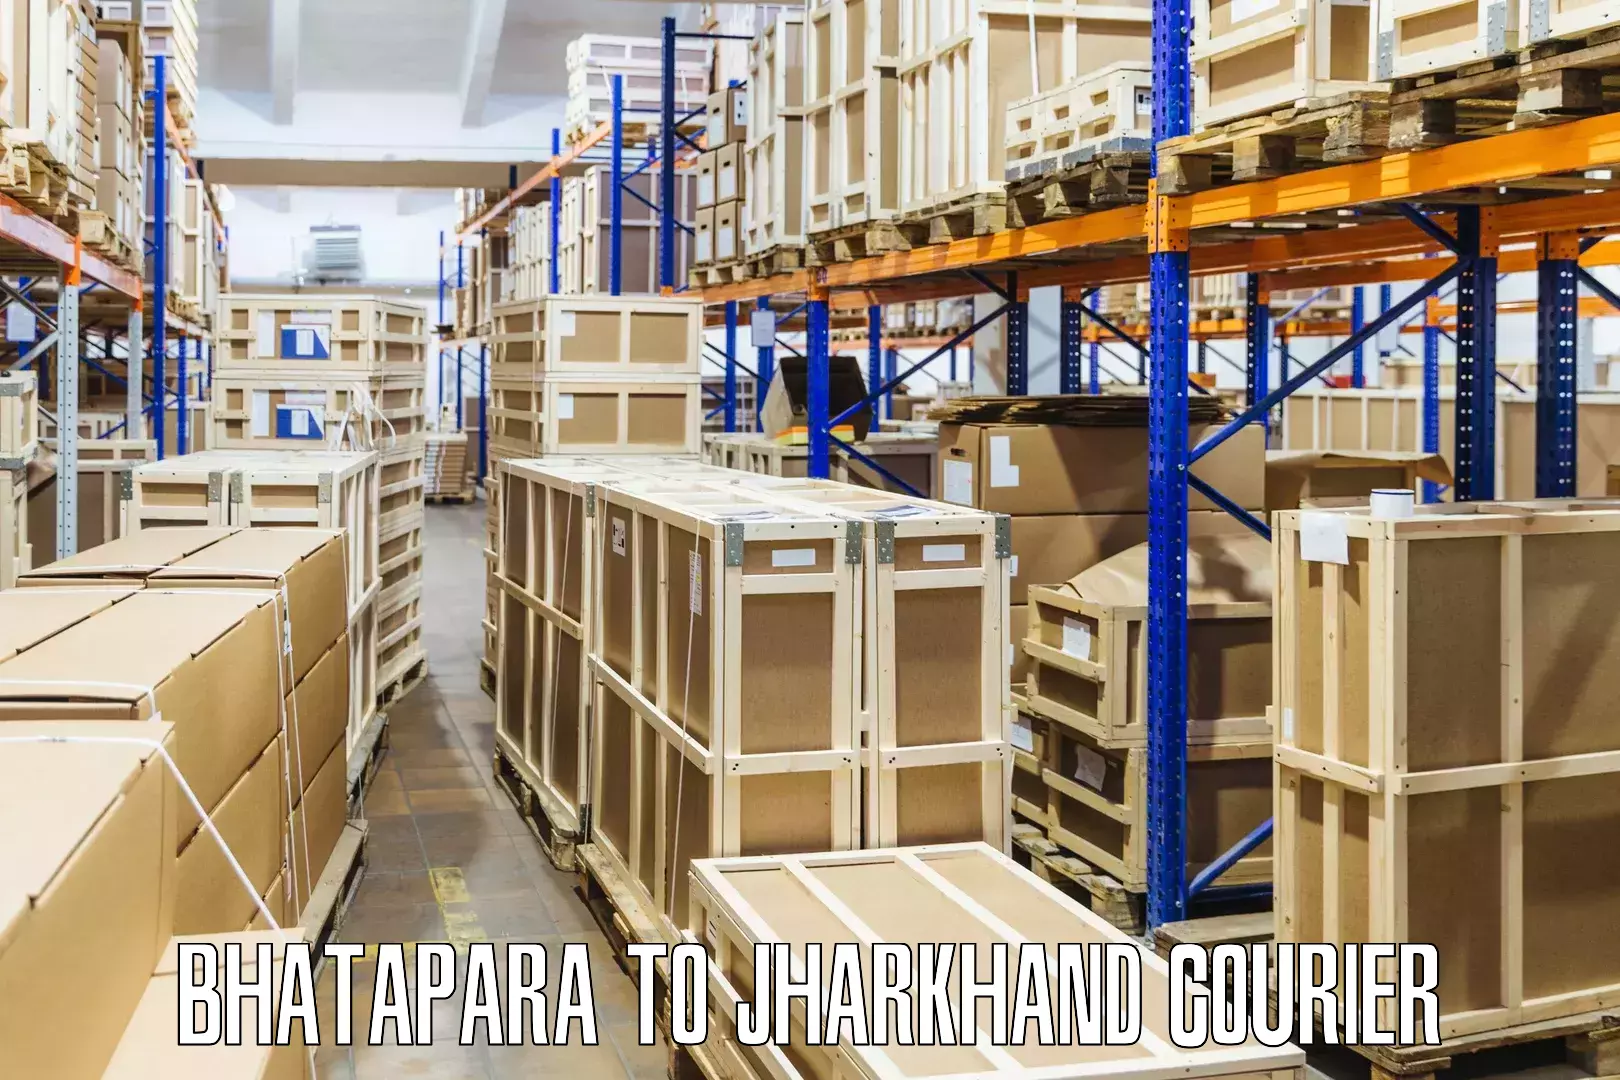 Modern courier technology Bhatapara to Ormanjhi